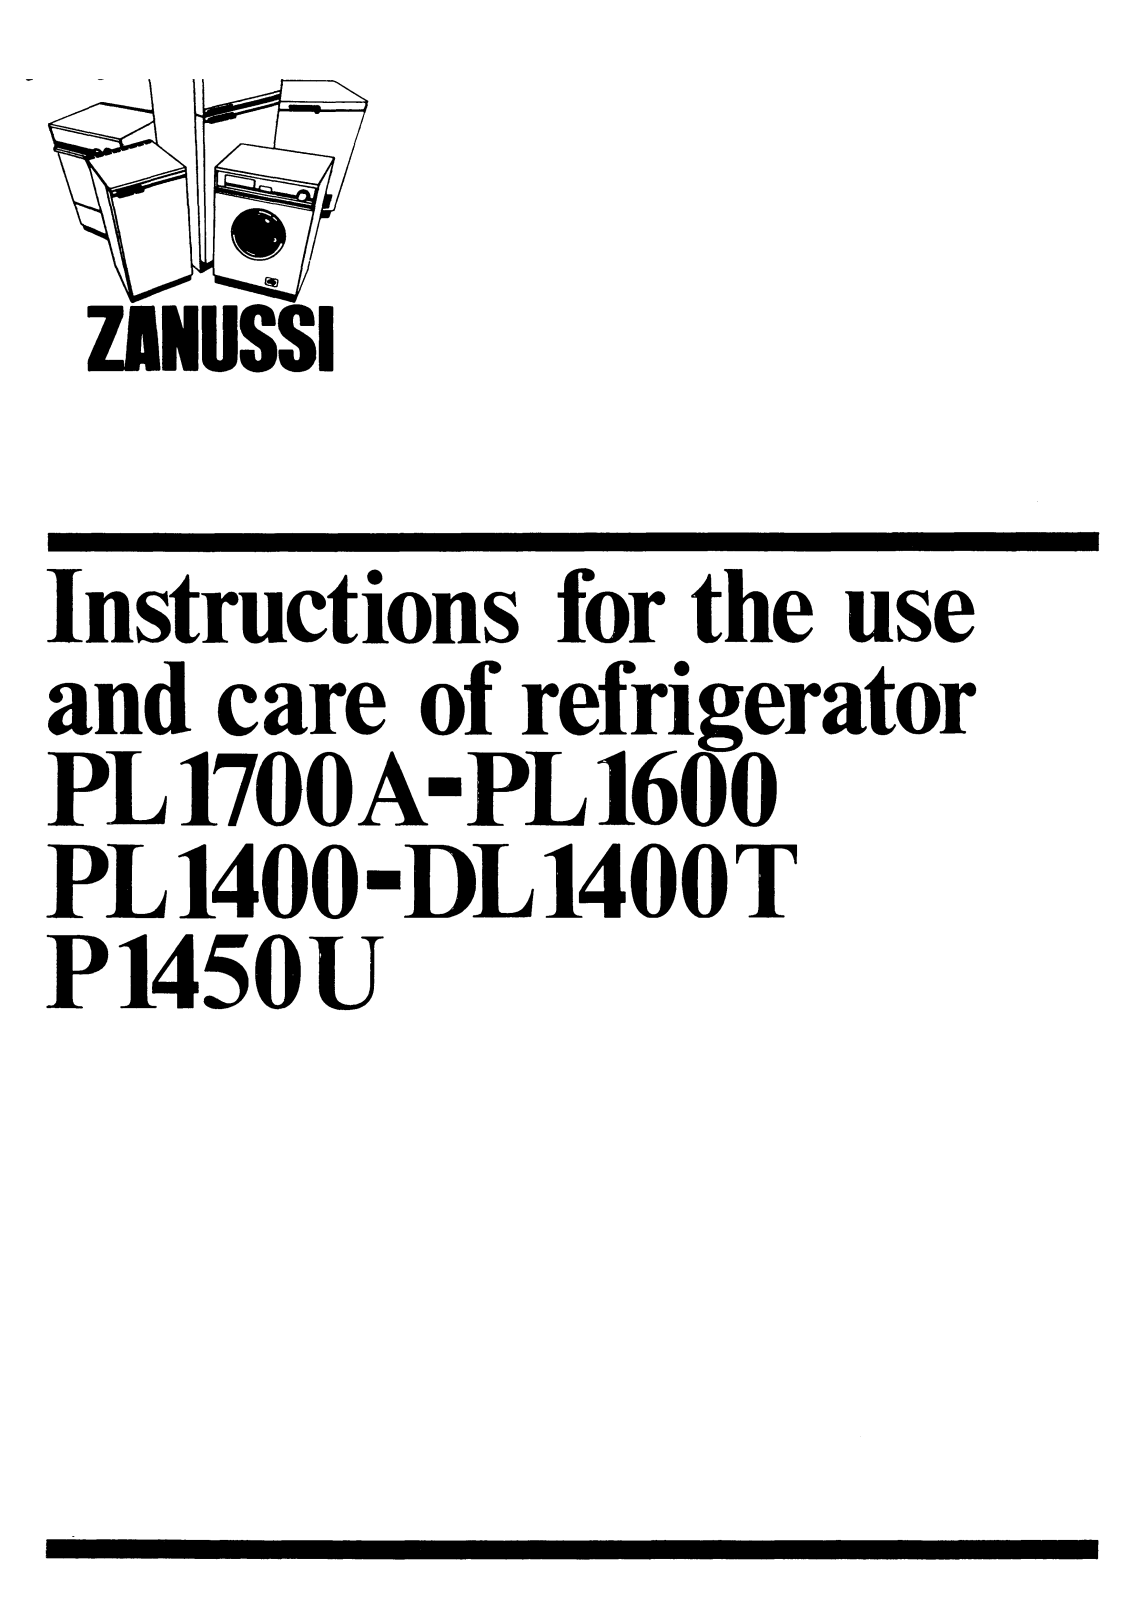 Zanussi DL 1400T, P1450 U, PL 1400, PL 1600, PL 1700A User Manual